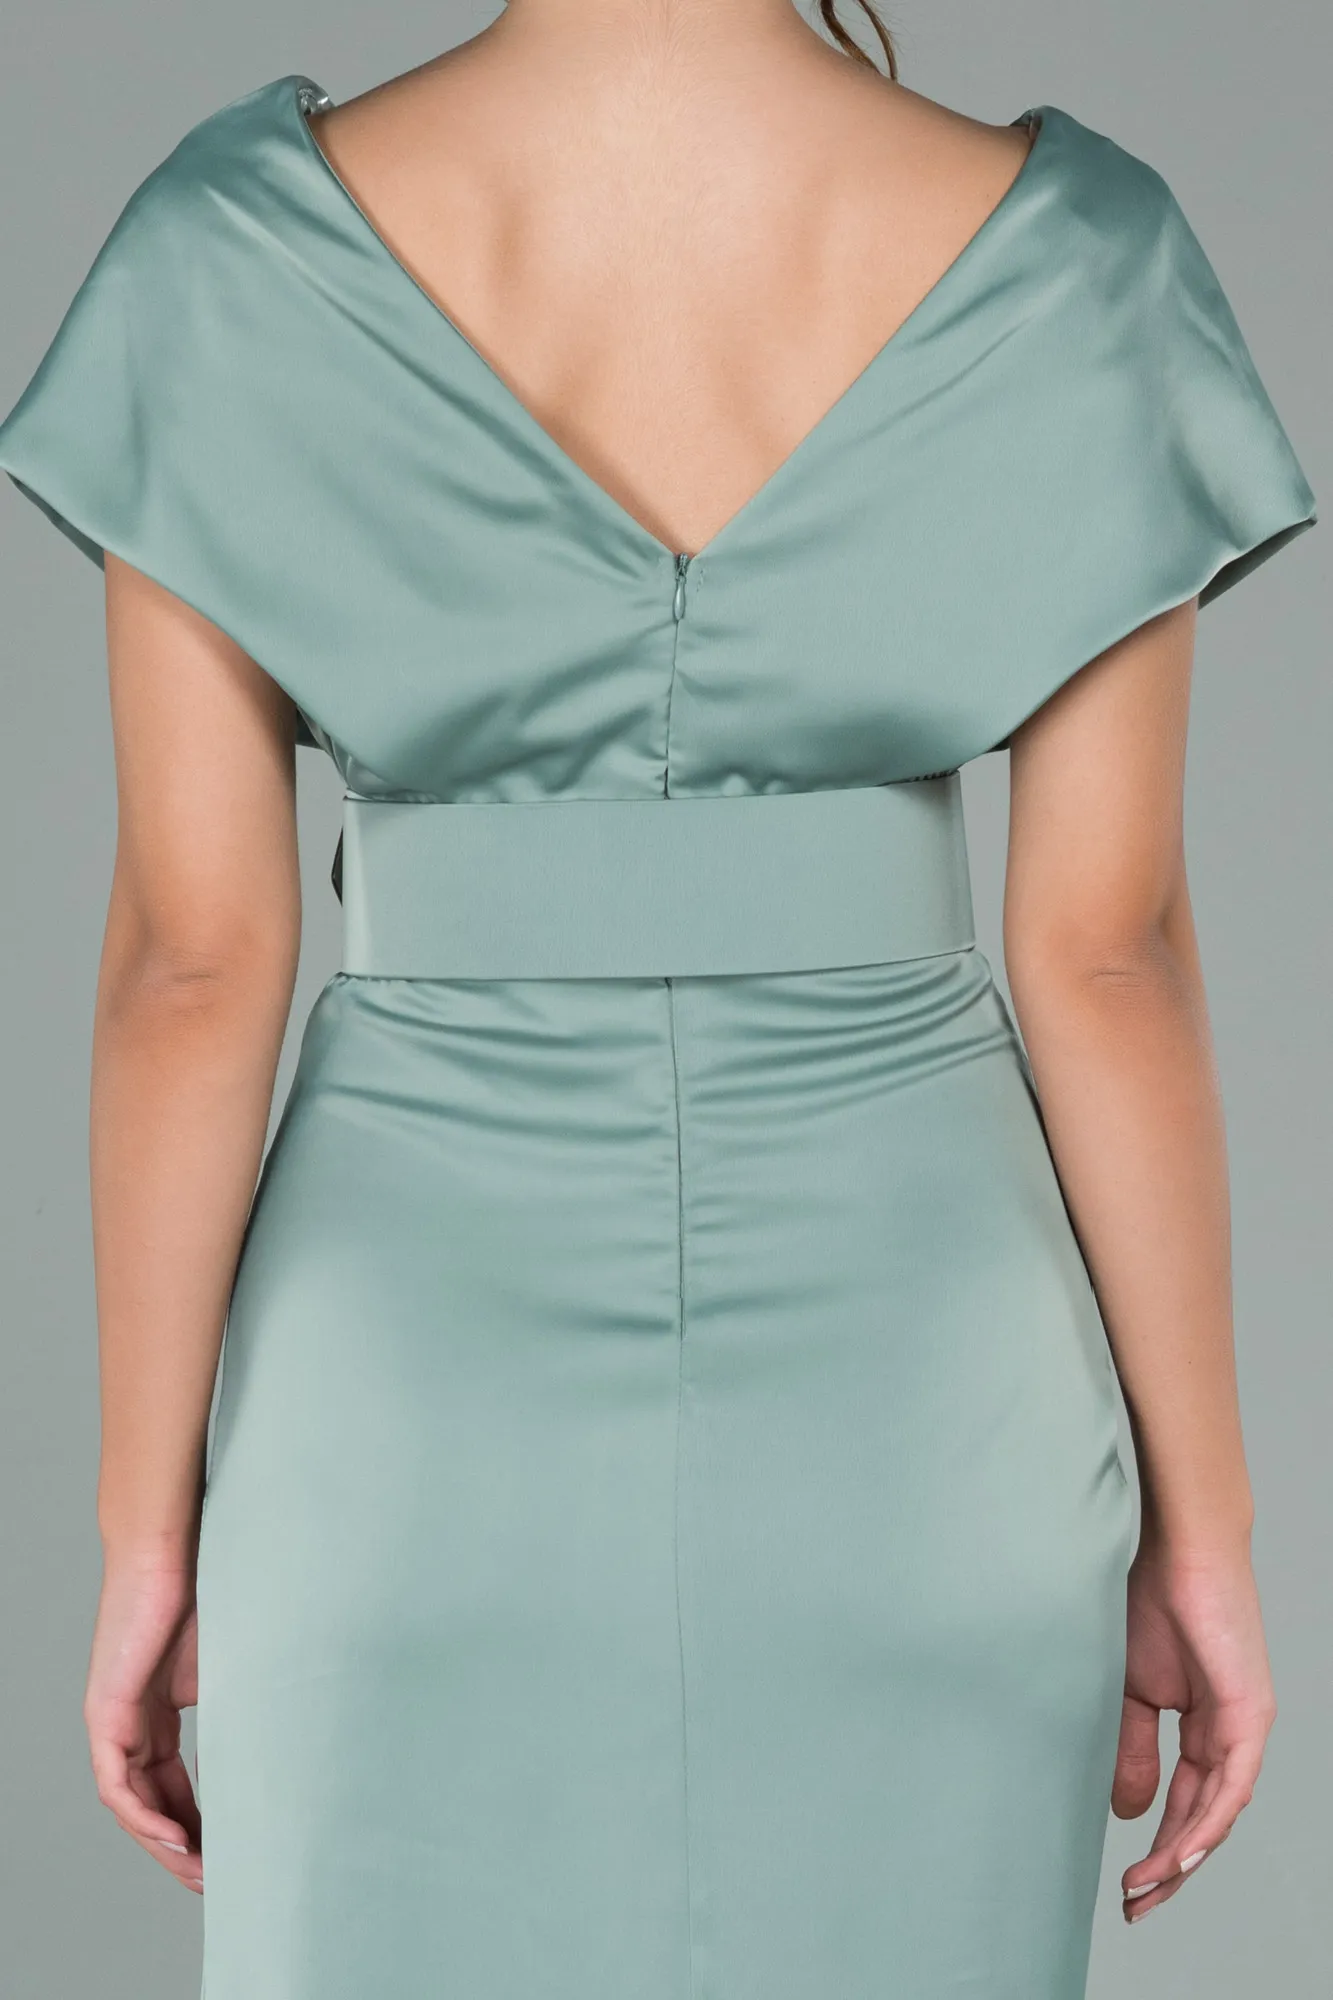 Turquoise-Short Satin Invitation Dress ABK1107